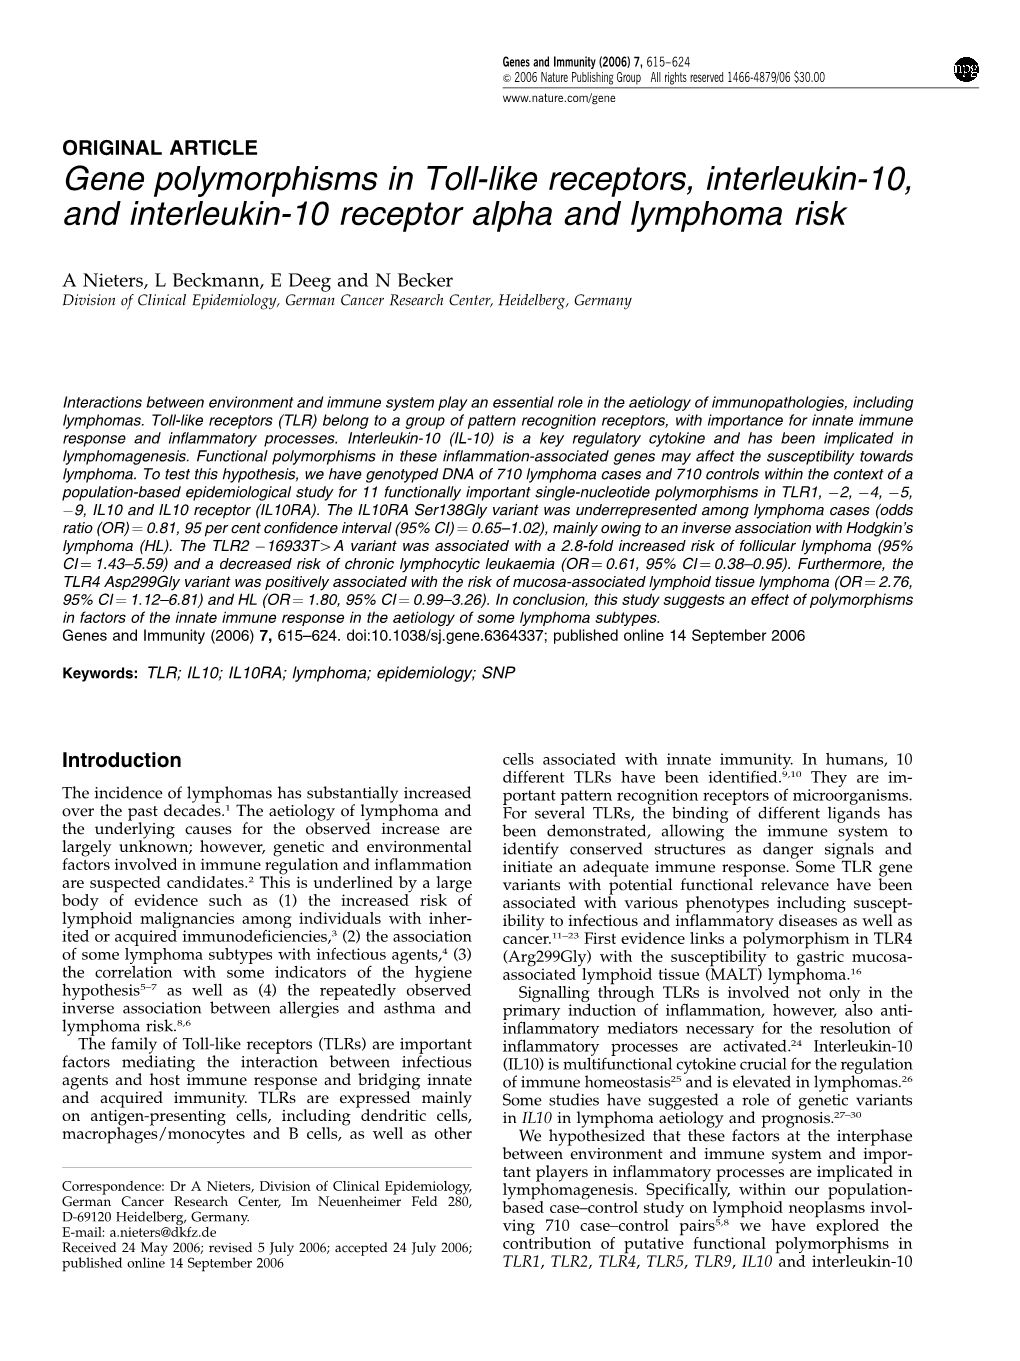 Gene Polymorphisms in Toll-Like Receptors, Interleukin-10, and Interleukin-10 Receptor Alpha and Lymphoma Risk